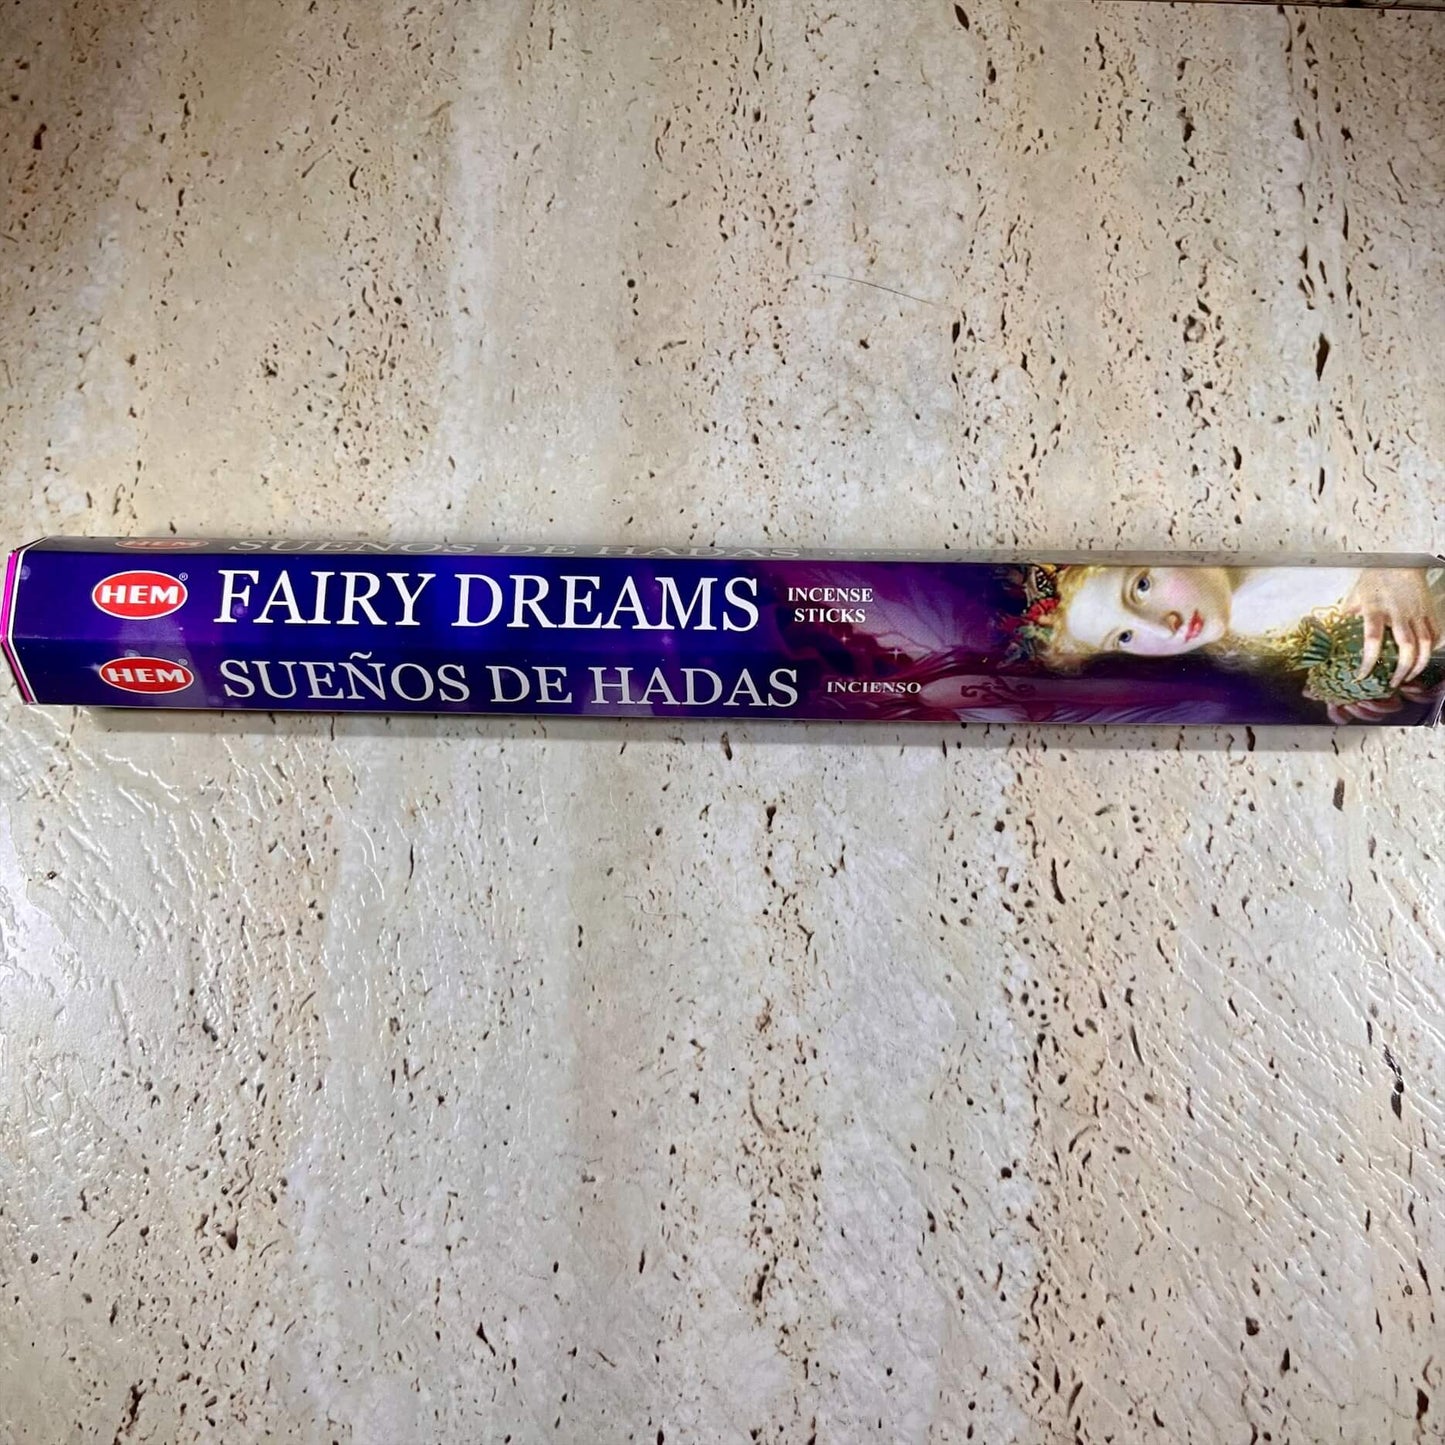 HEM Fairy Dreams Hex Incense